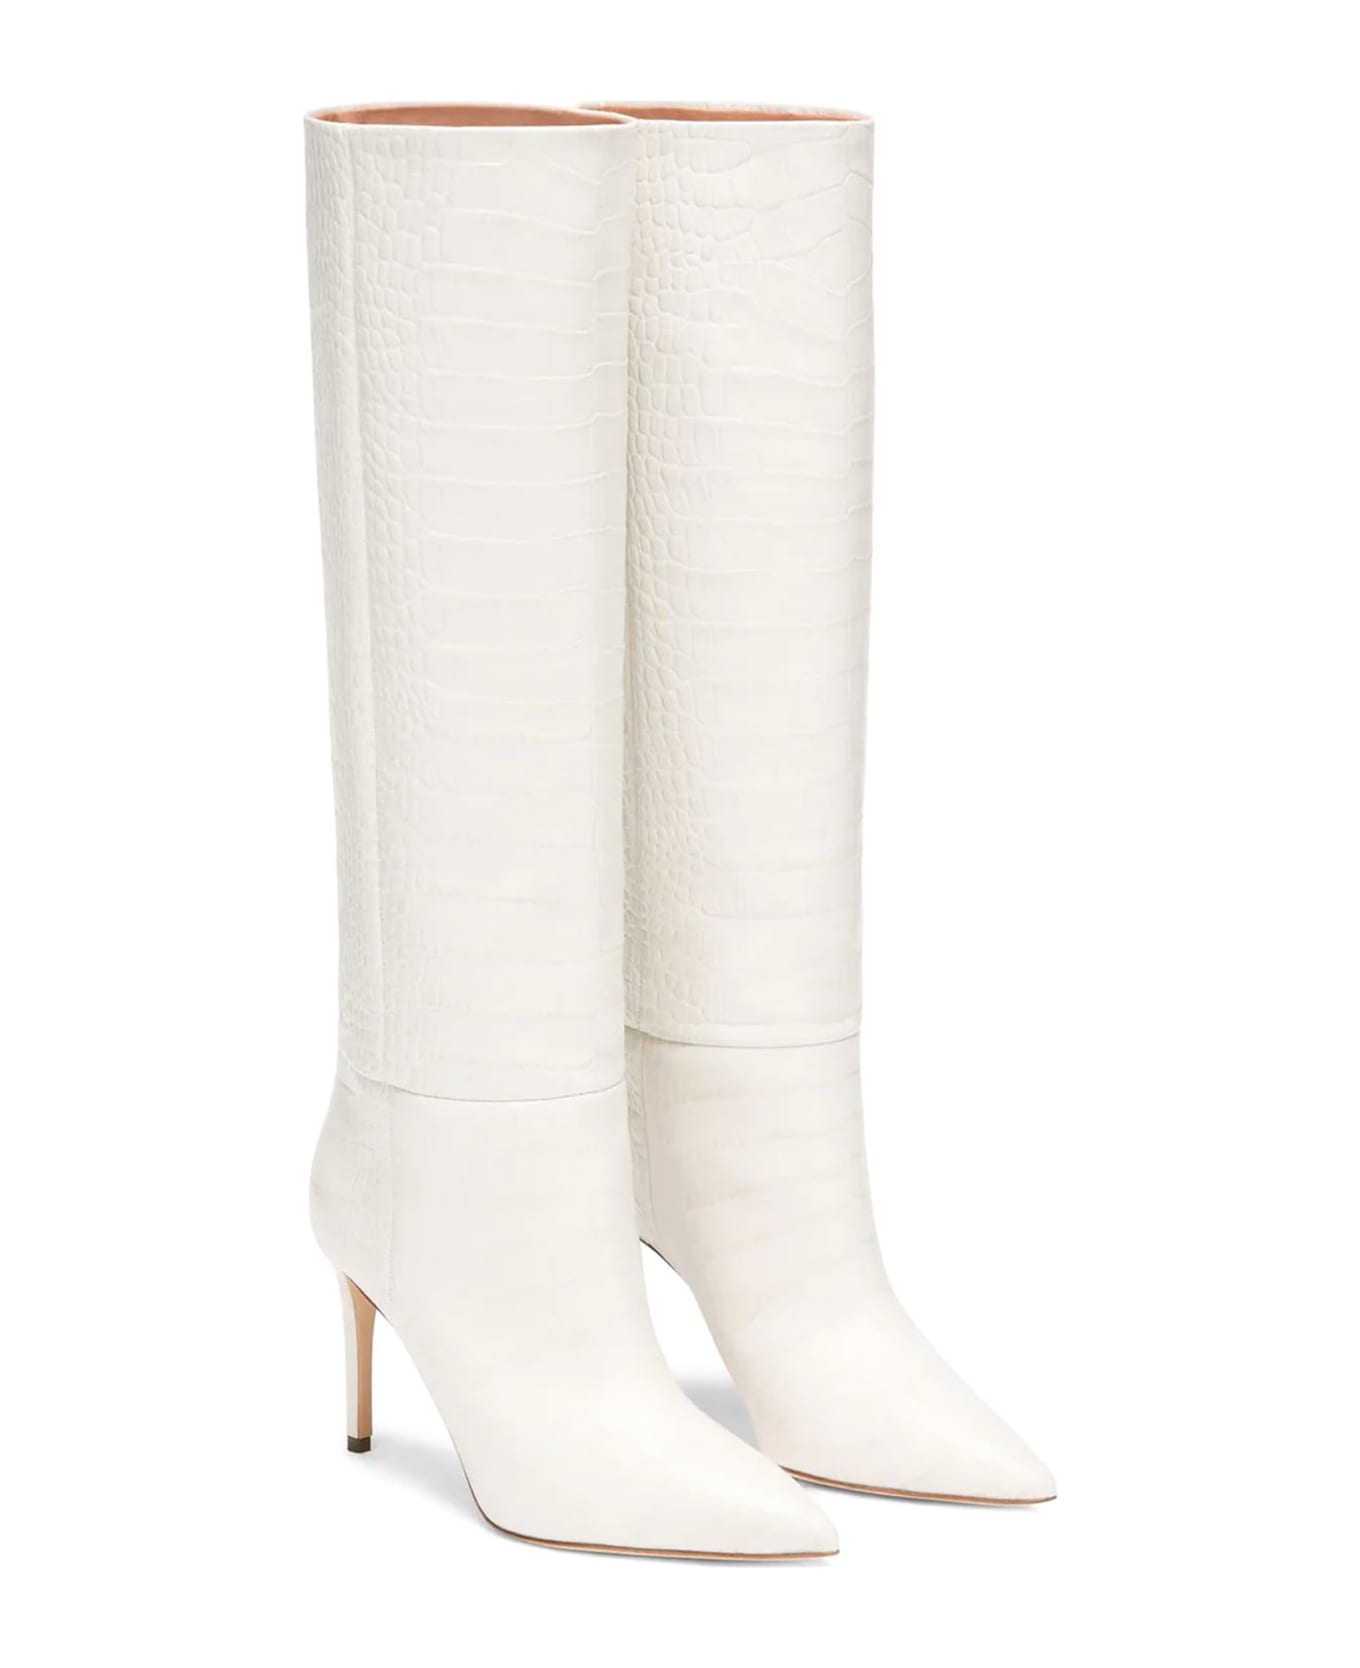 Paris Texas White Croc-effect Leather Boots - White